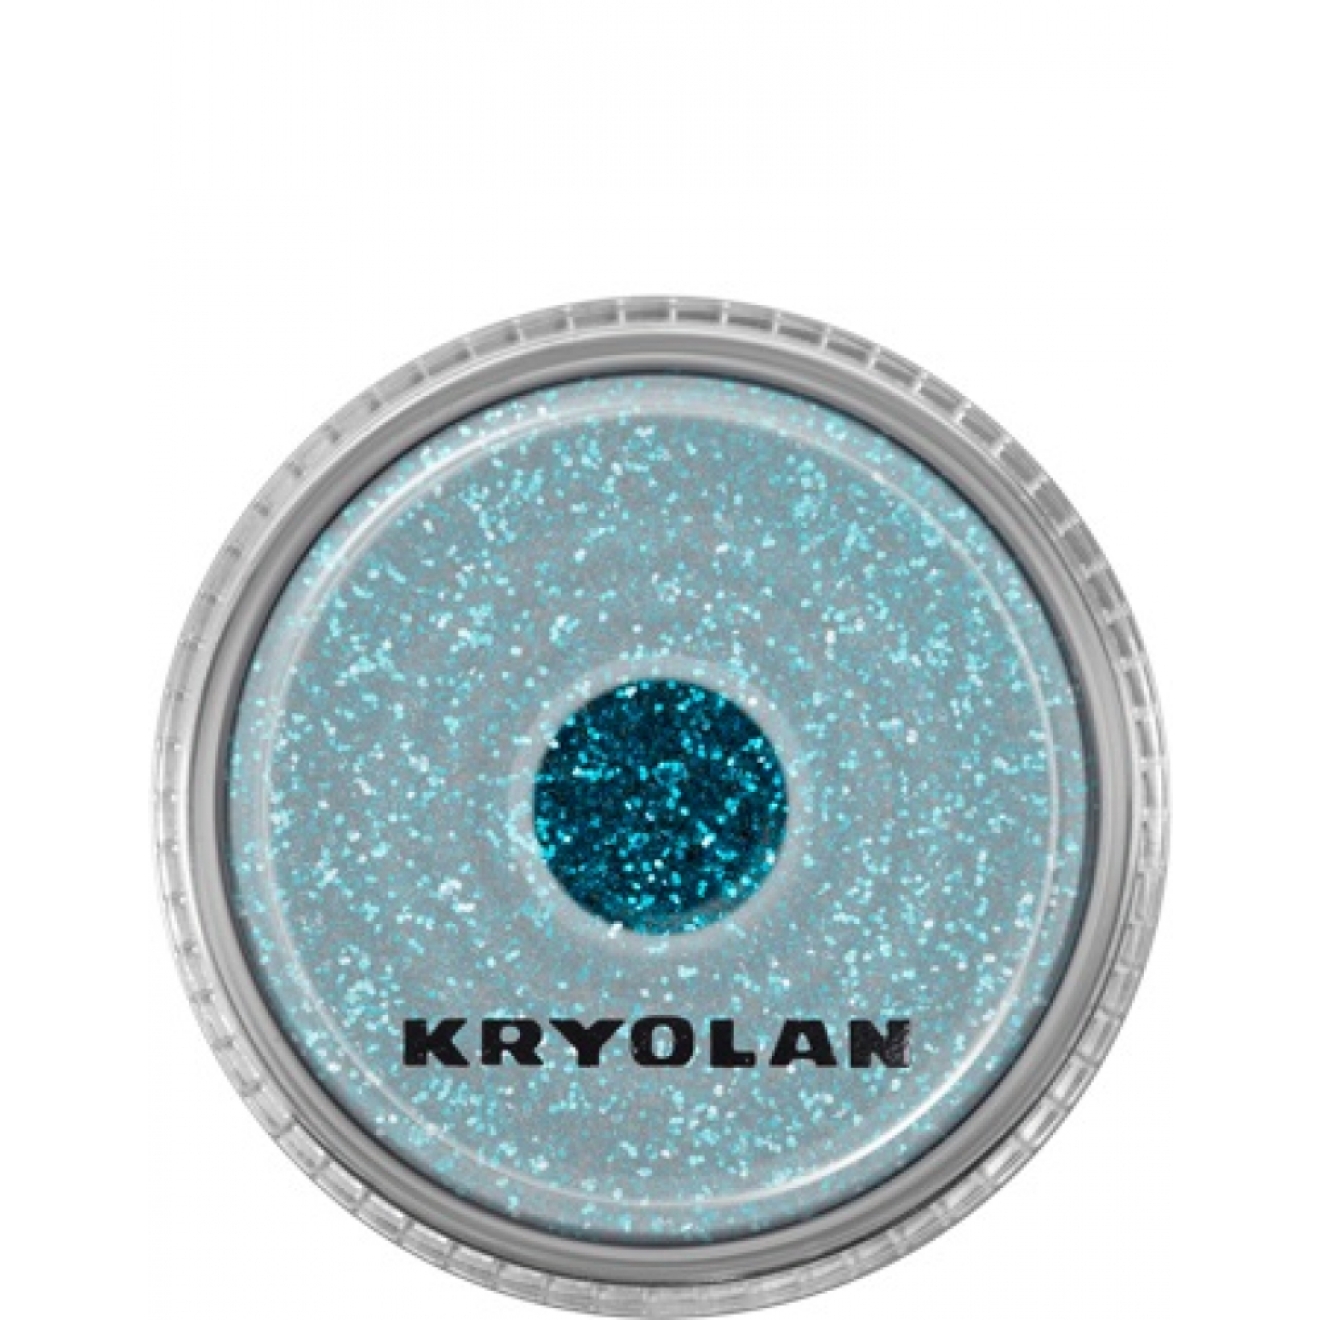 Kryolan Polyester Glimmer mittel, ca. 4g